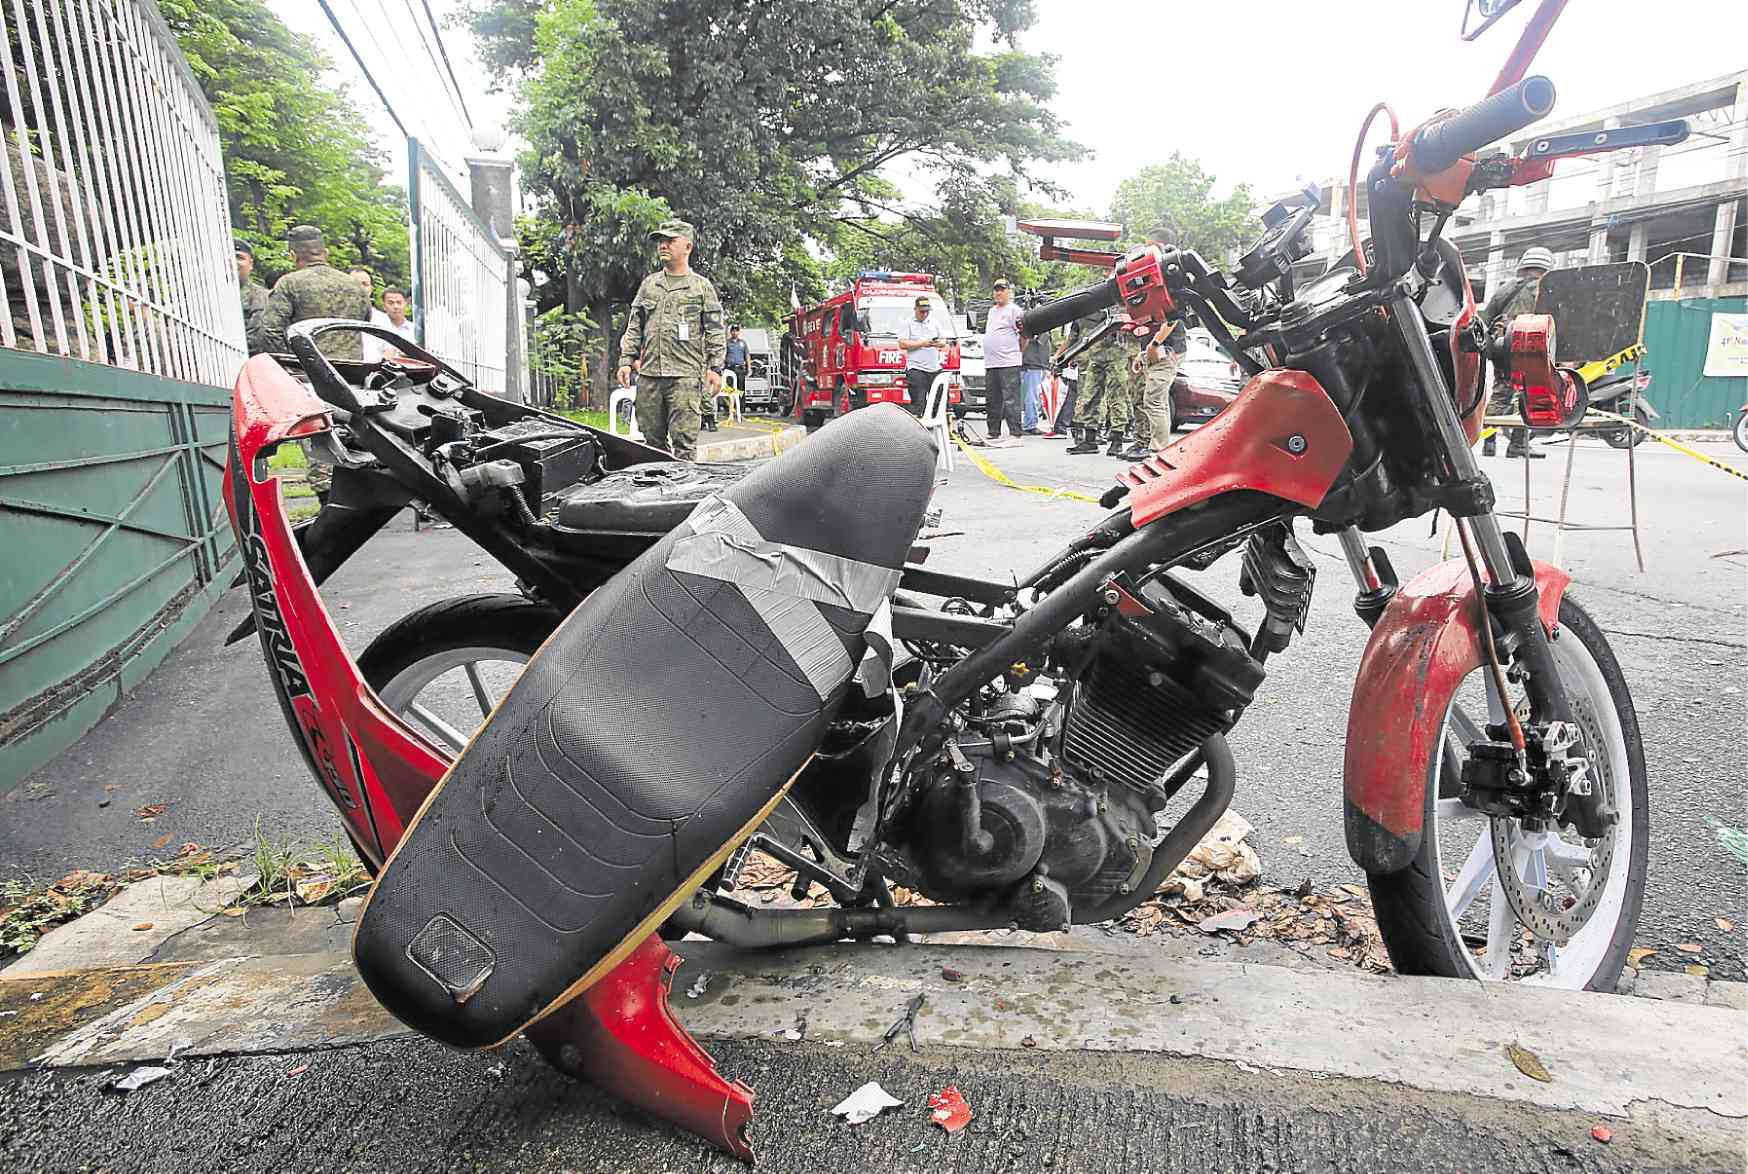 Army: Motorbike left near gym cause for concern